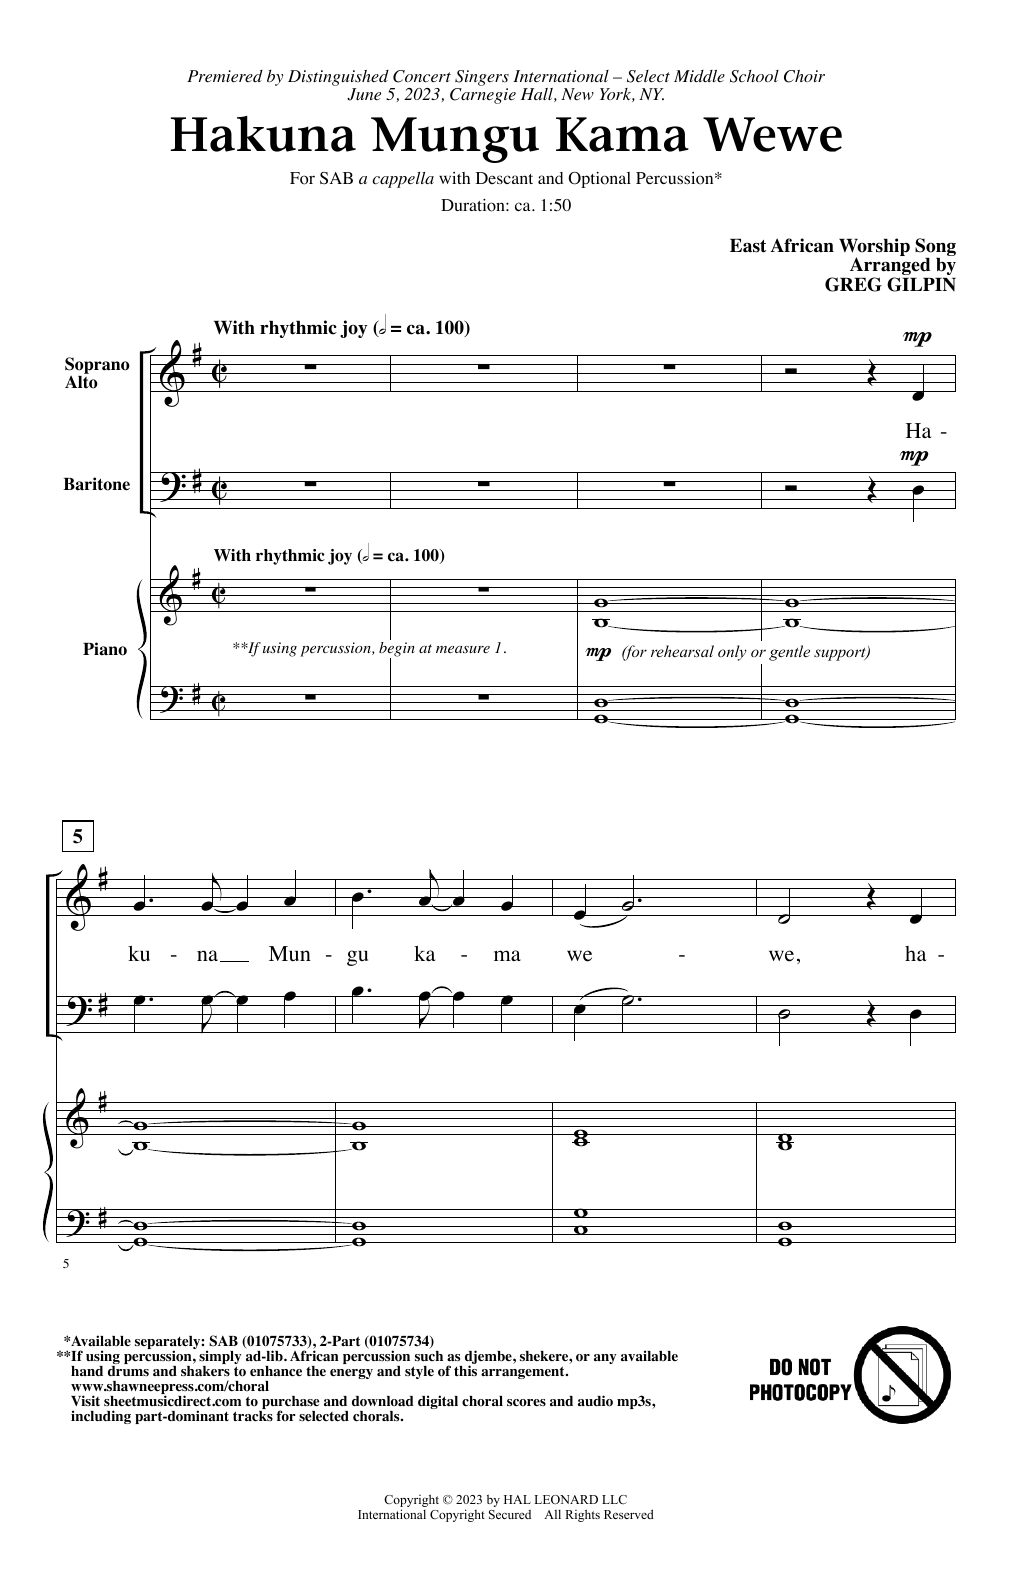 Download Greg Gilpin Hakuna Mungu Kama Wewe Sheet Music and learn how to play 2-Part Choir PDF digital score in minutes